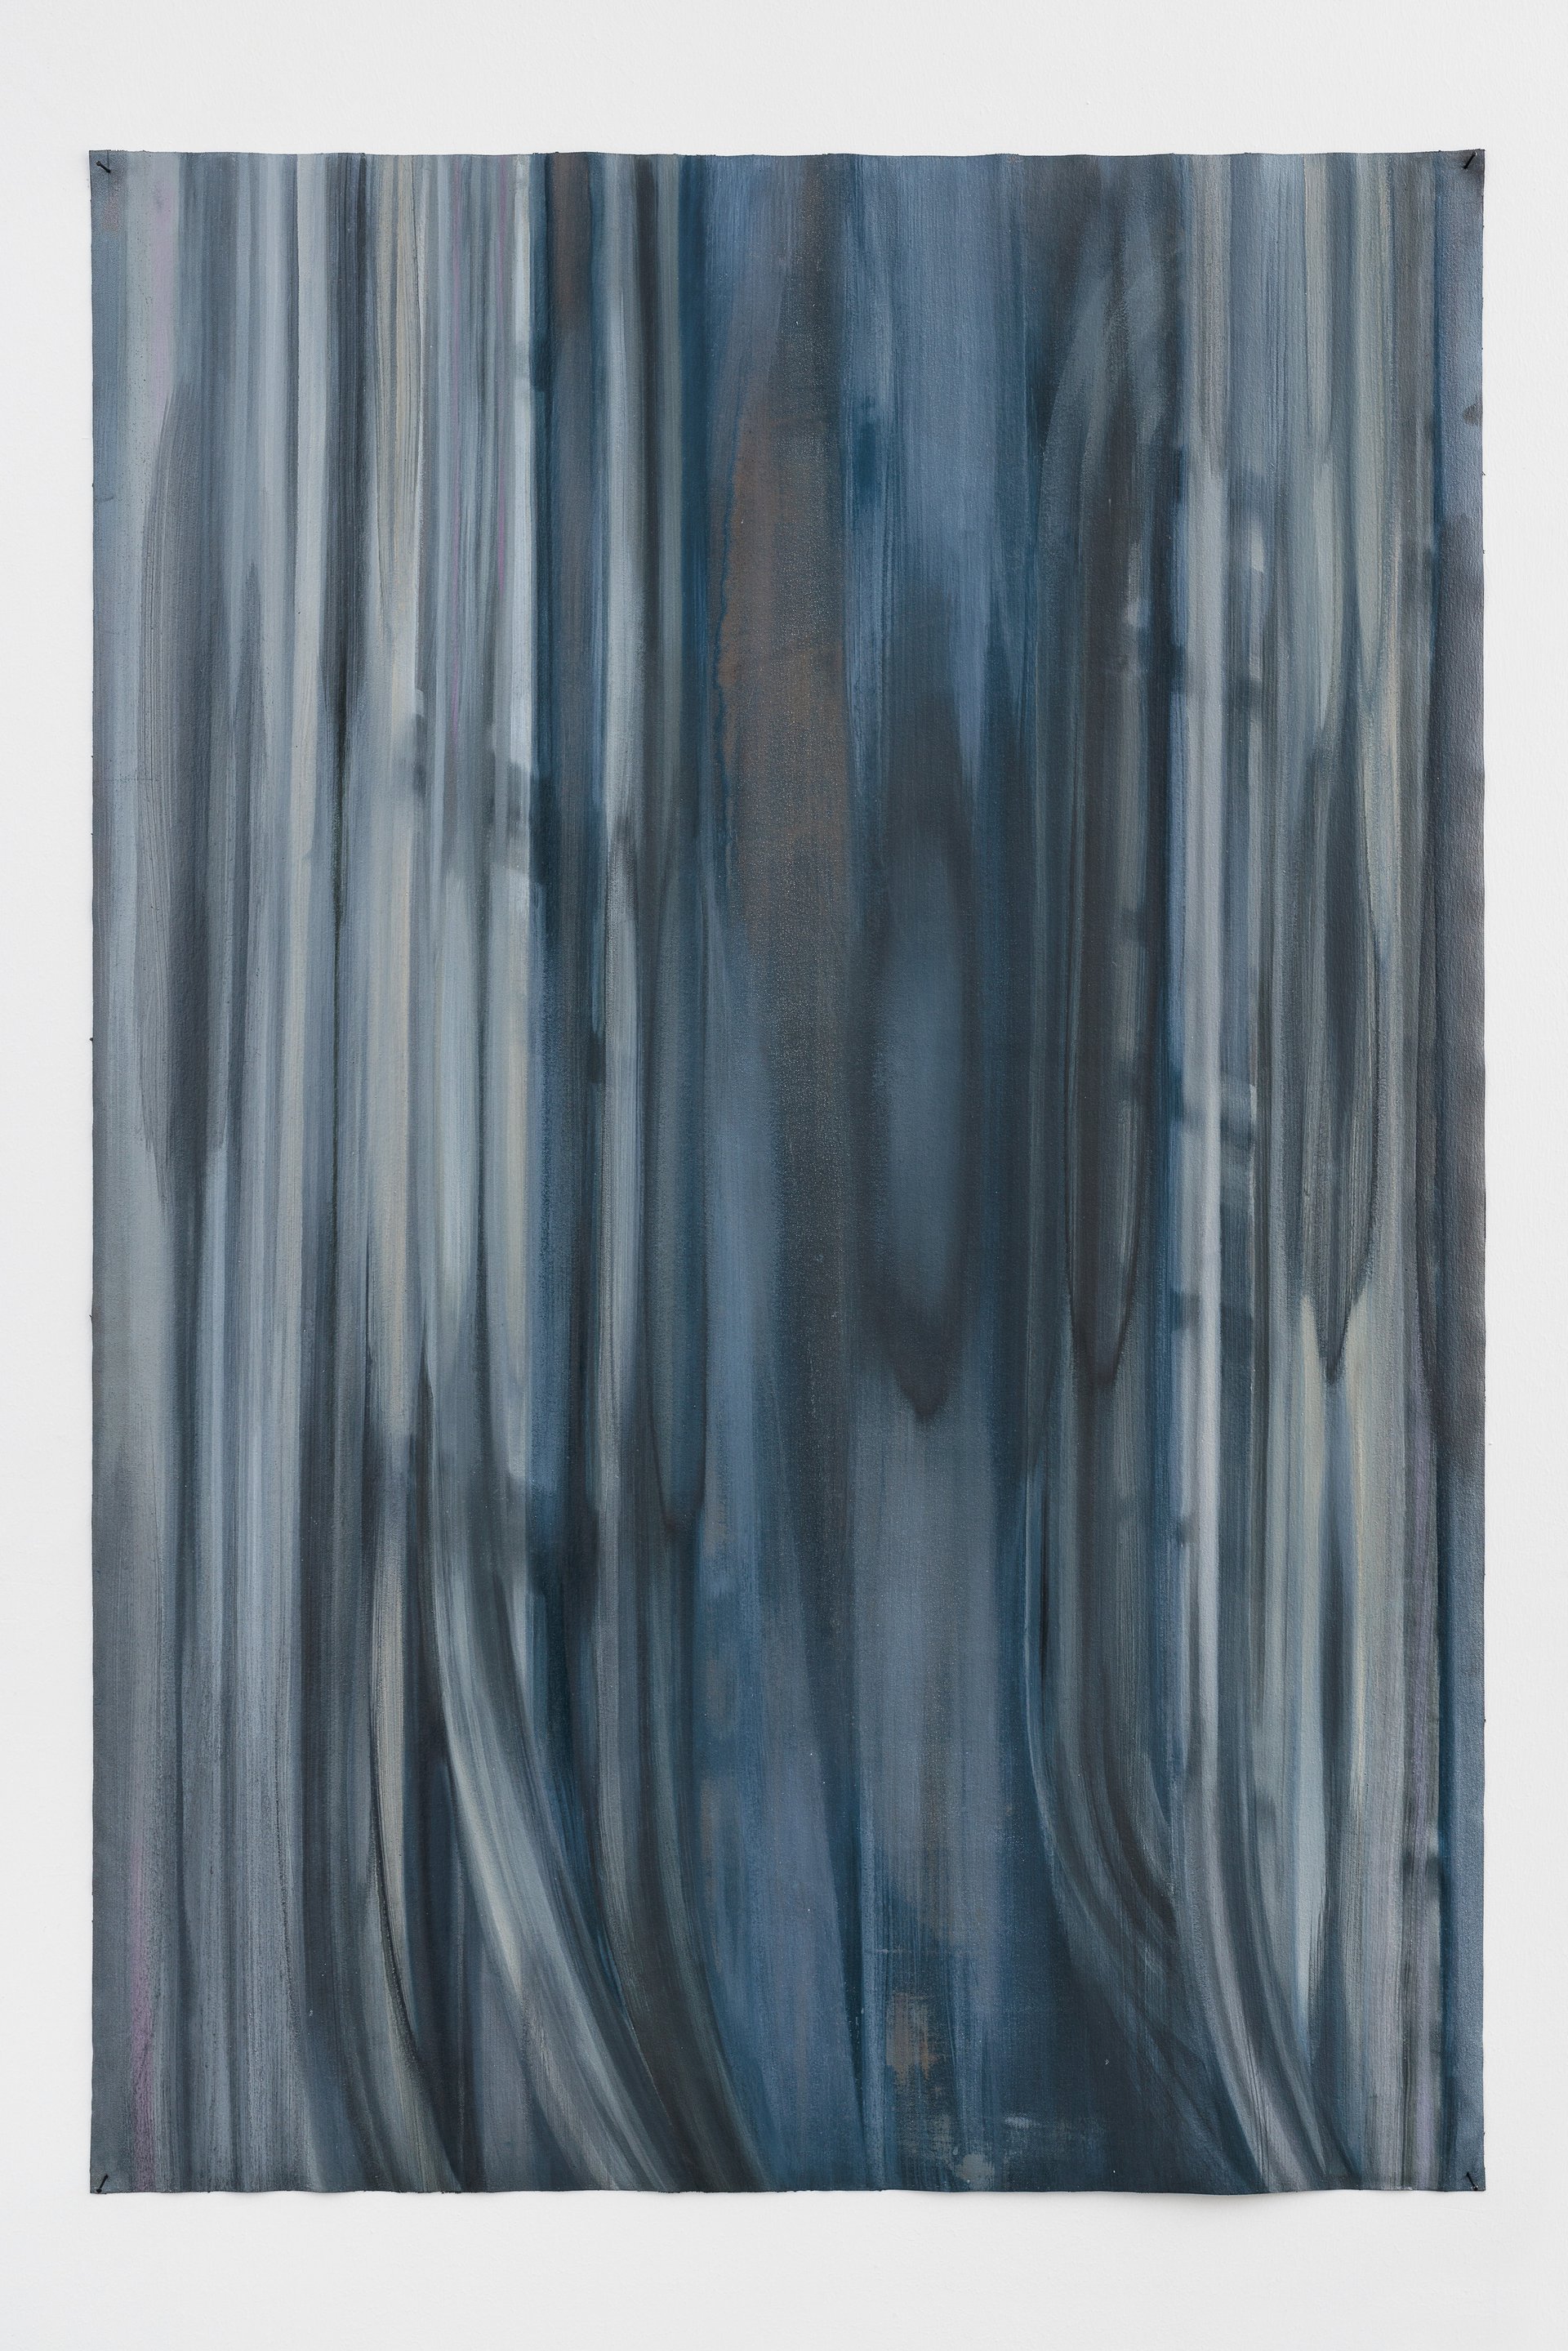 Evelyn PlaschgPoles, 2023Oil on canvas151 x 104 cm